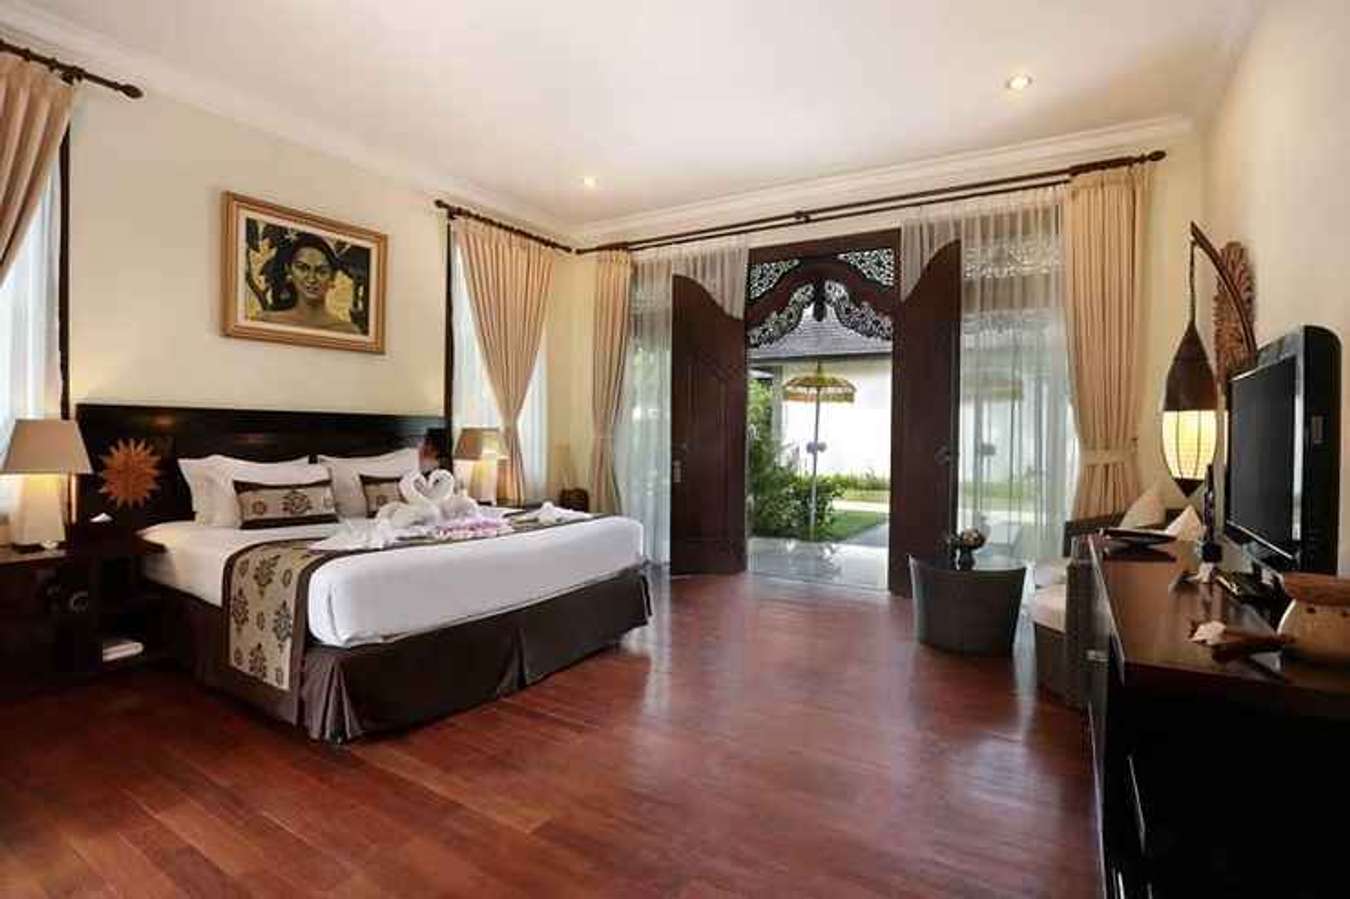 Kamar di Ombak Sunset Hotel - Hotel romantis di Lombok